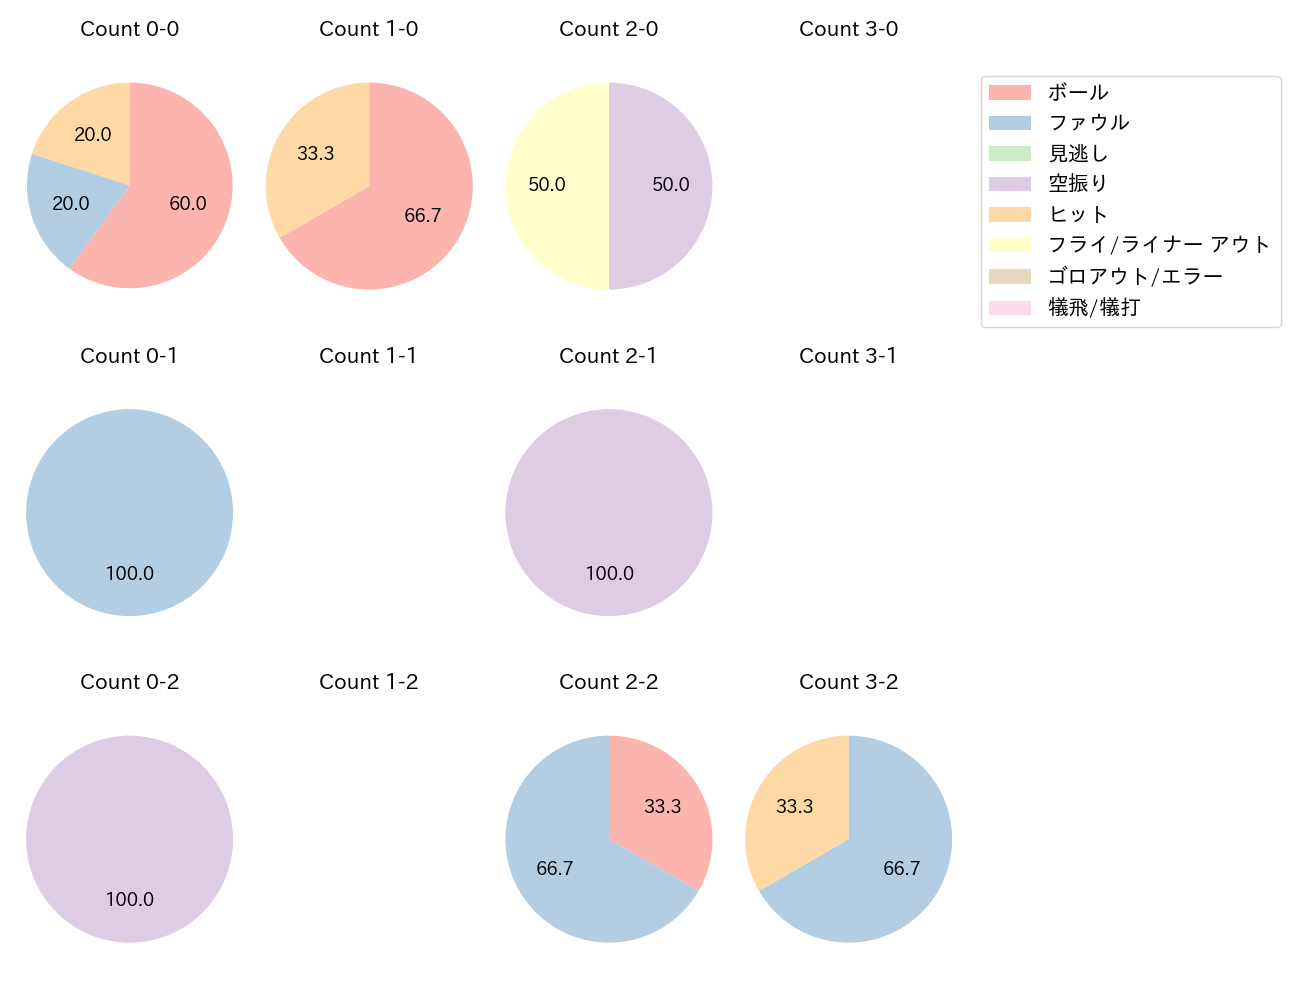 小園 海斗の球数分布(2021年11月)